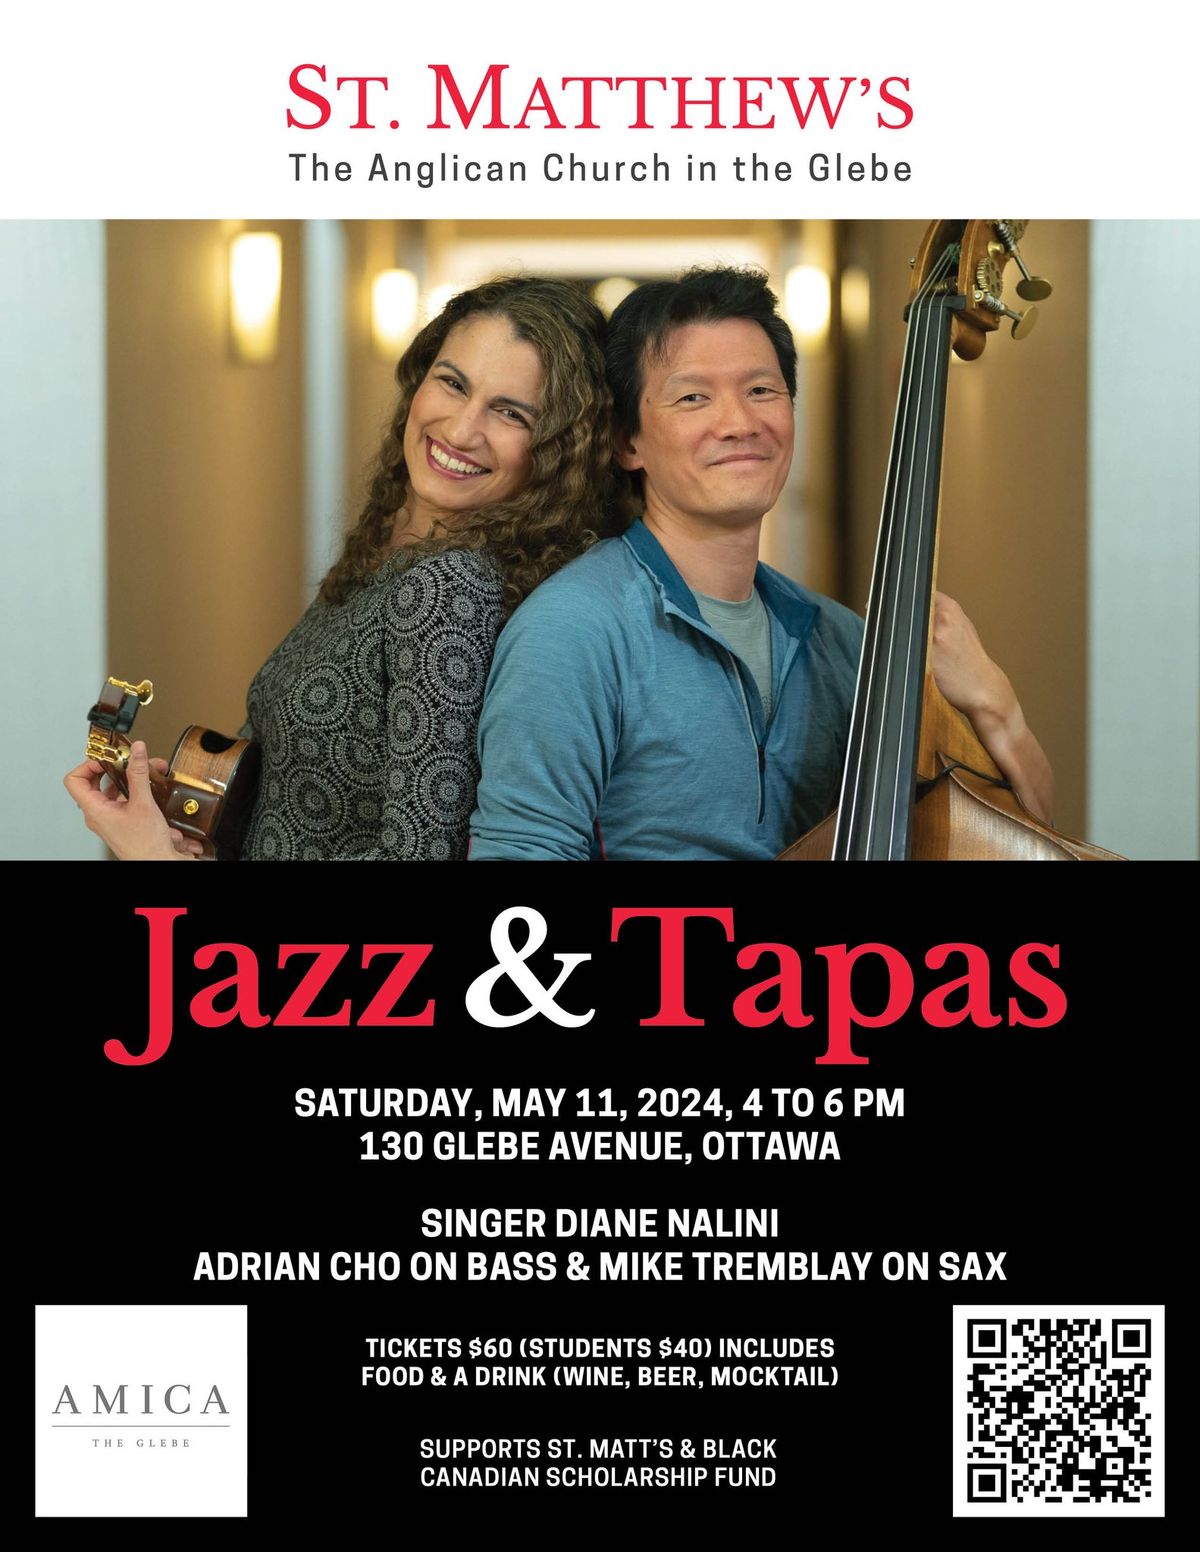 Jazz and Tapas at St. Matt's